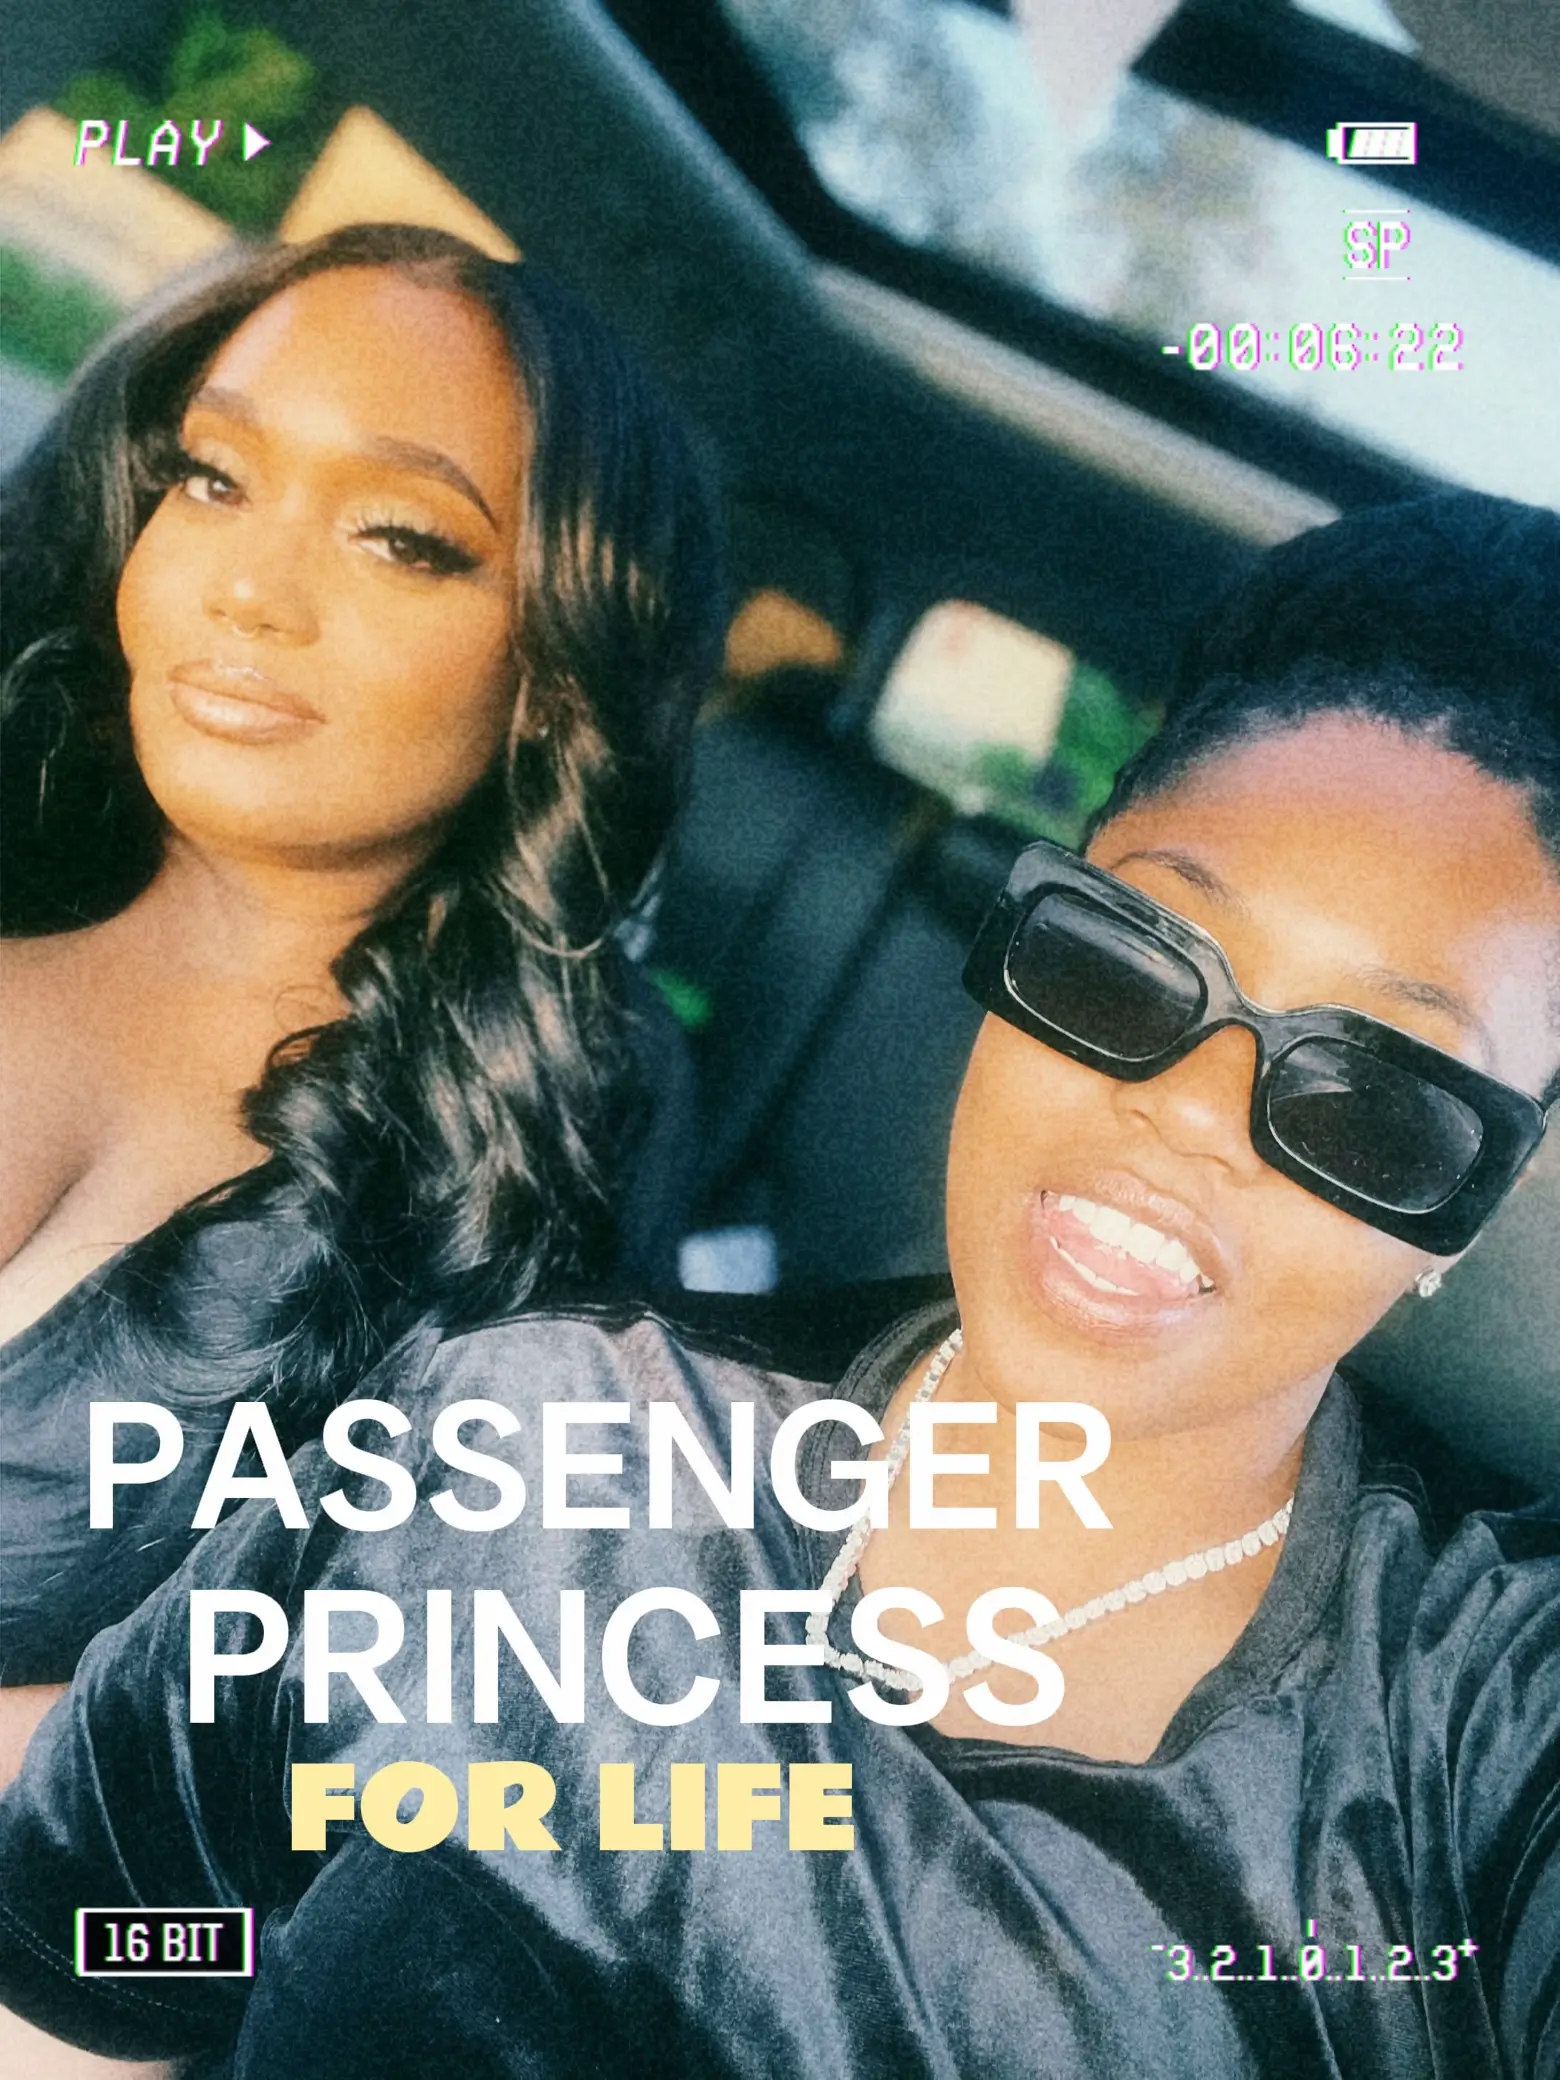 Passenger Princess - What is a passenger princess?